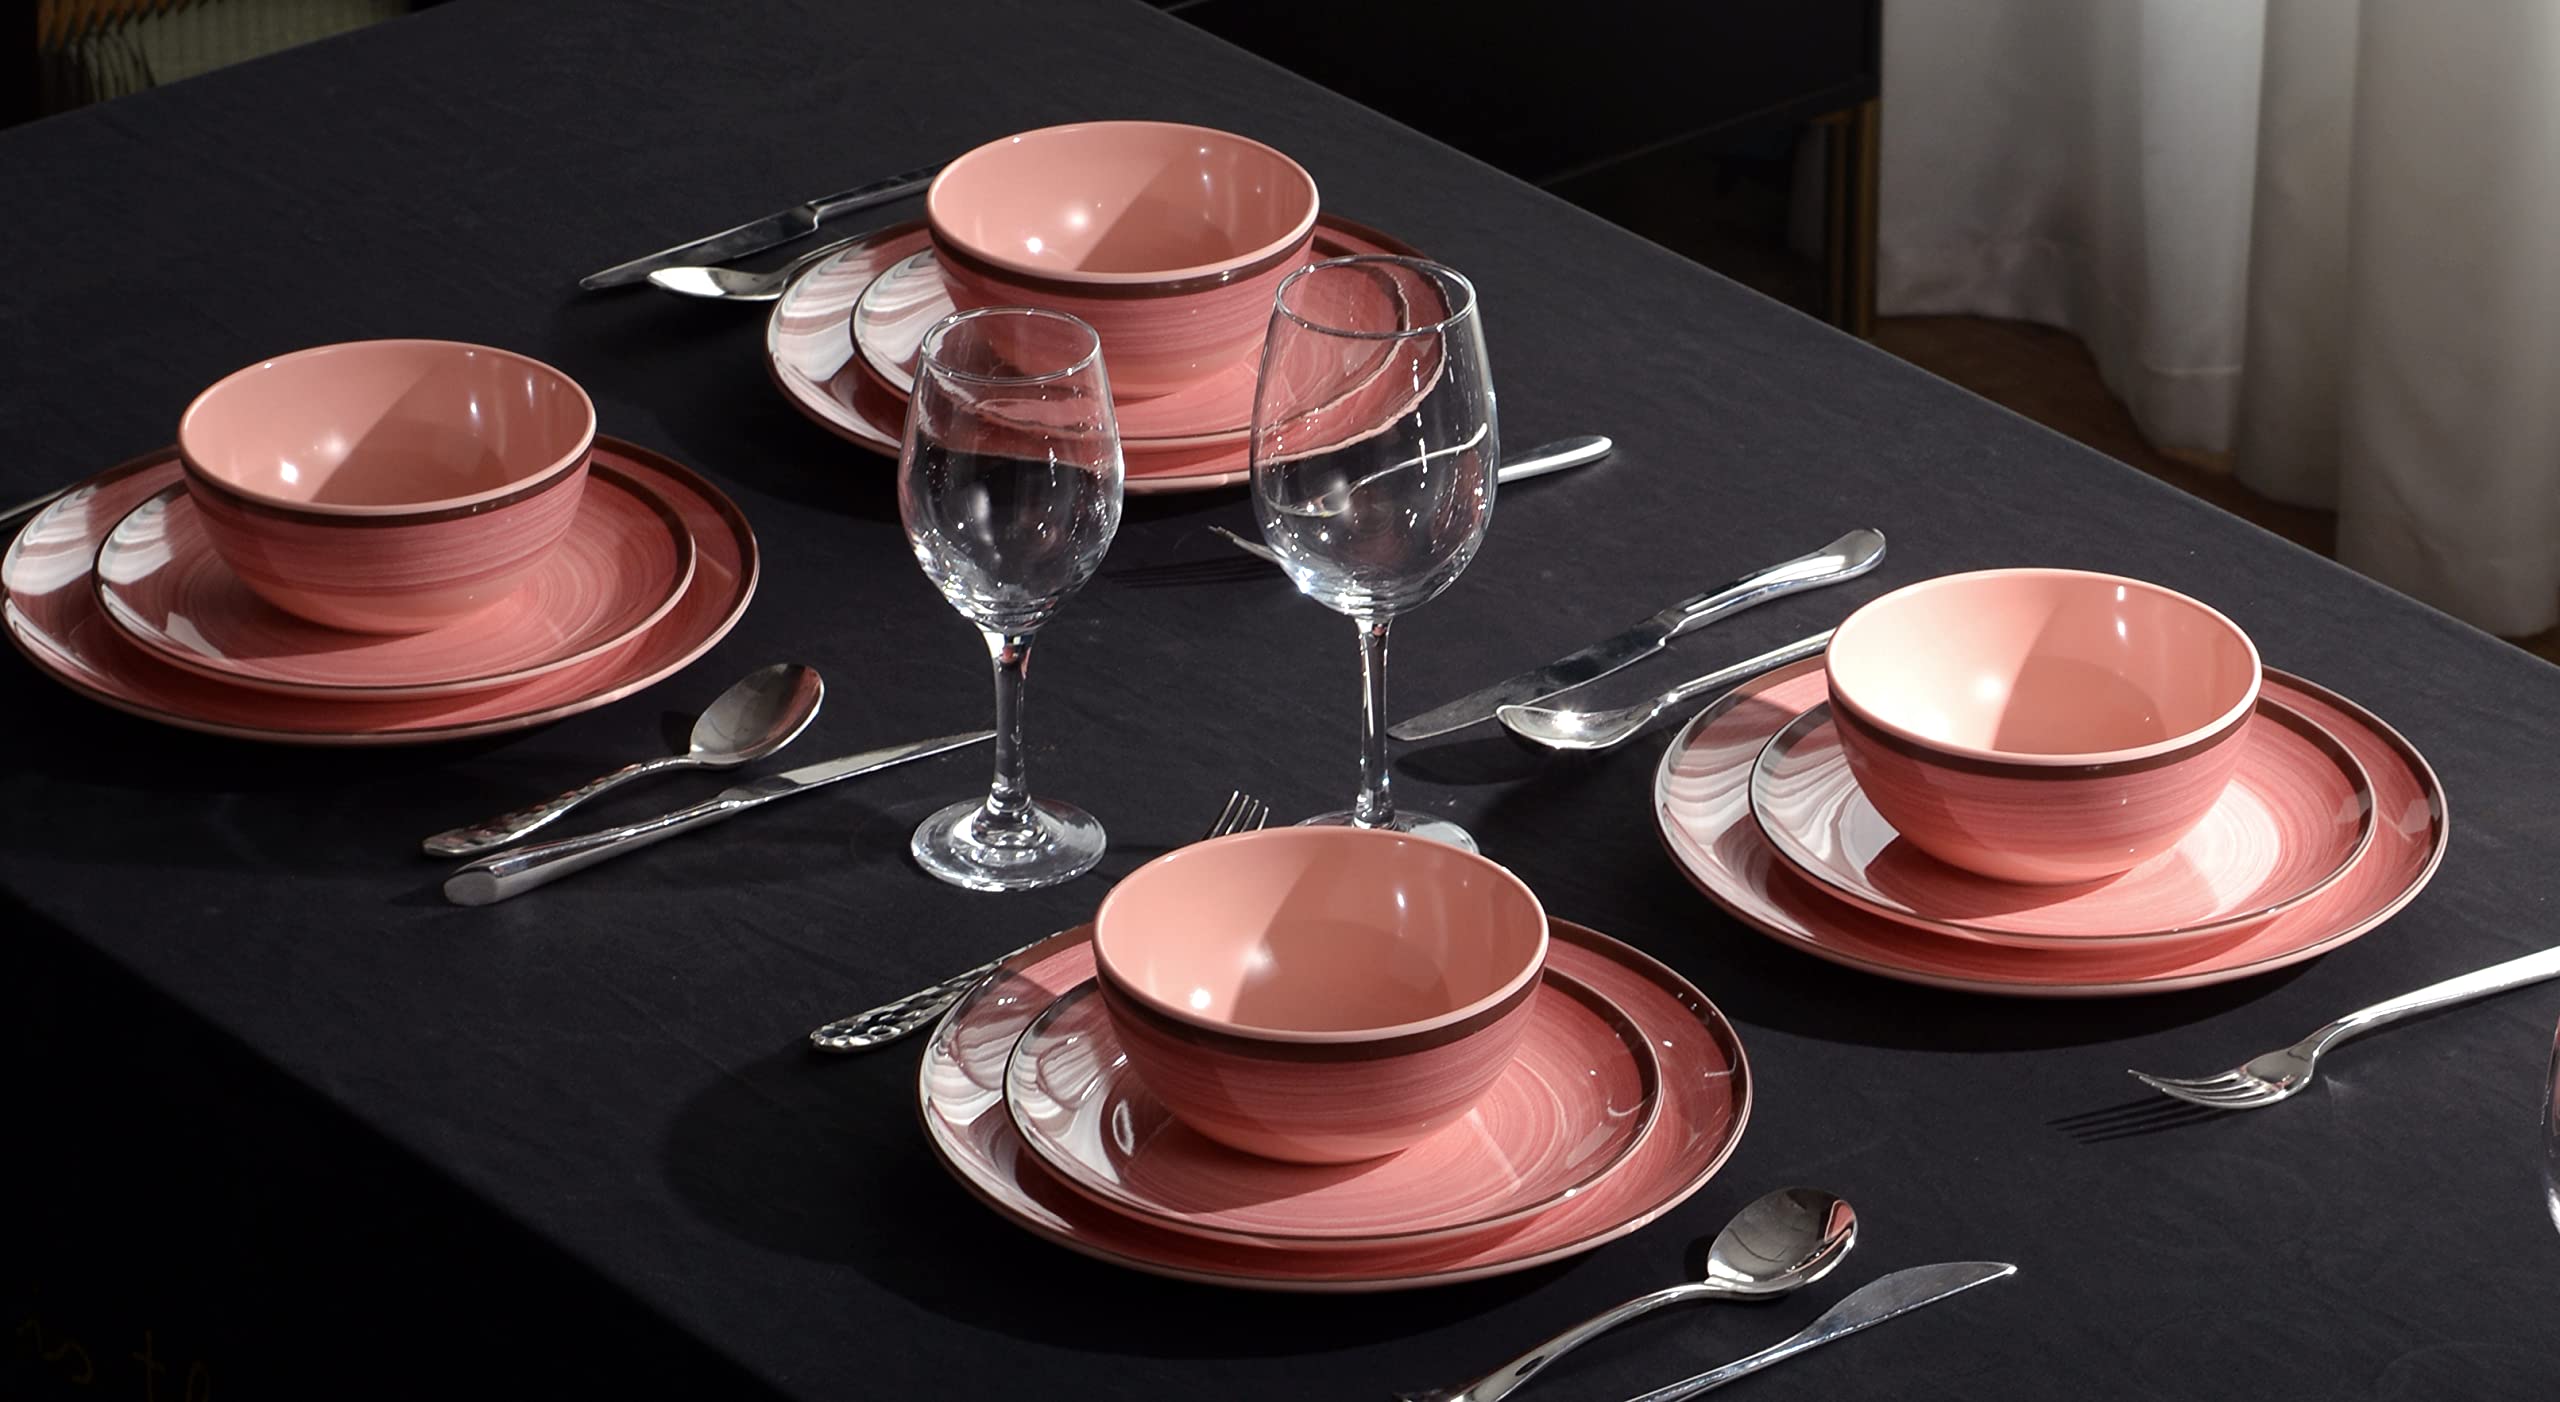 12Pcs Melamine Dinnerware Set, Plates And Bowls Sets for 4, Pink Color Dinnerware Sets, Melamine Plates Bowls Indoor and Outdoor Use Dish Set Dishwasher Safe BPA Free(Pink)